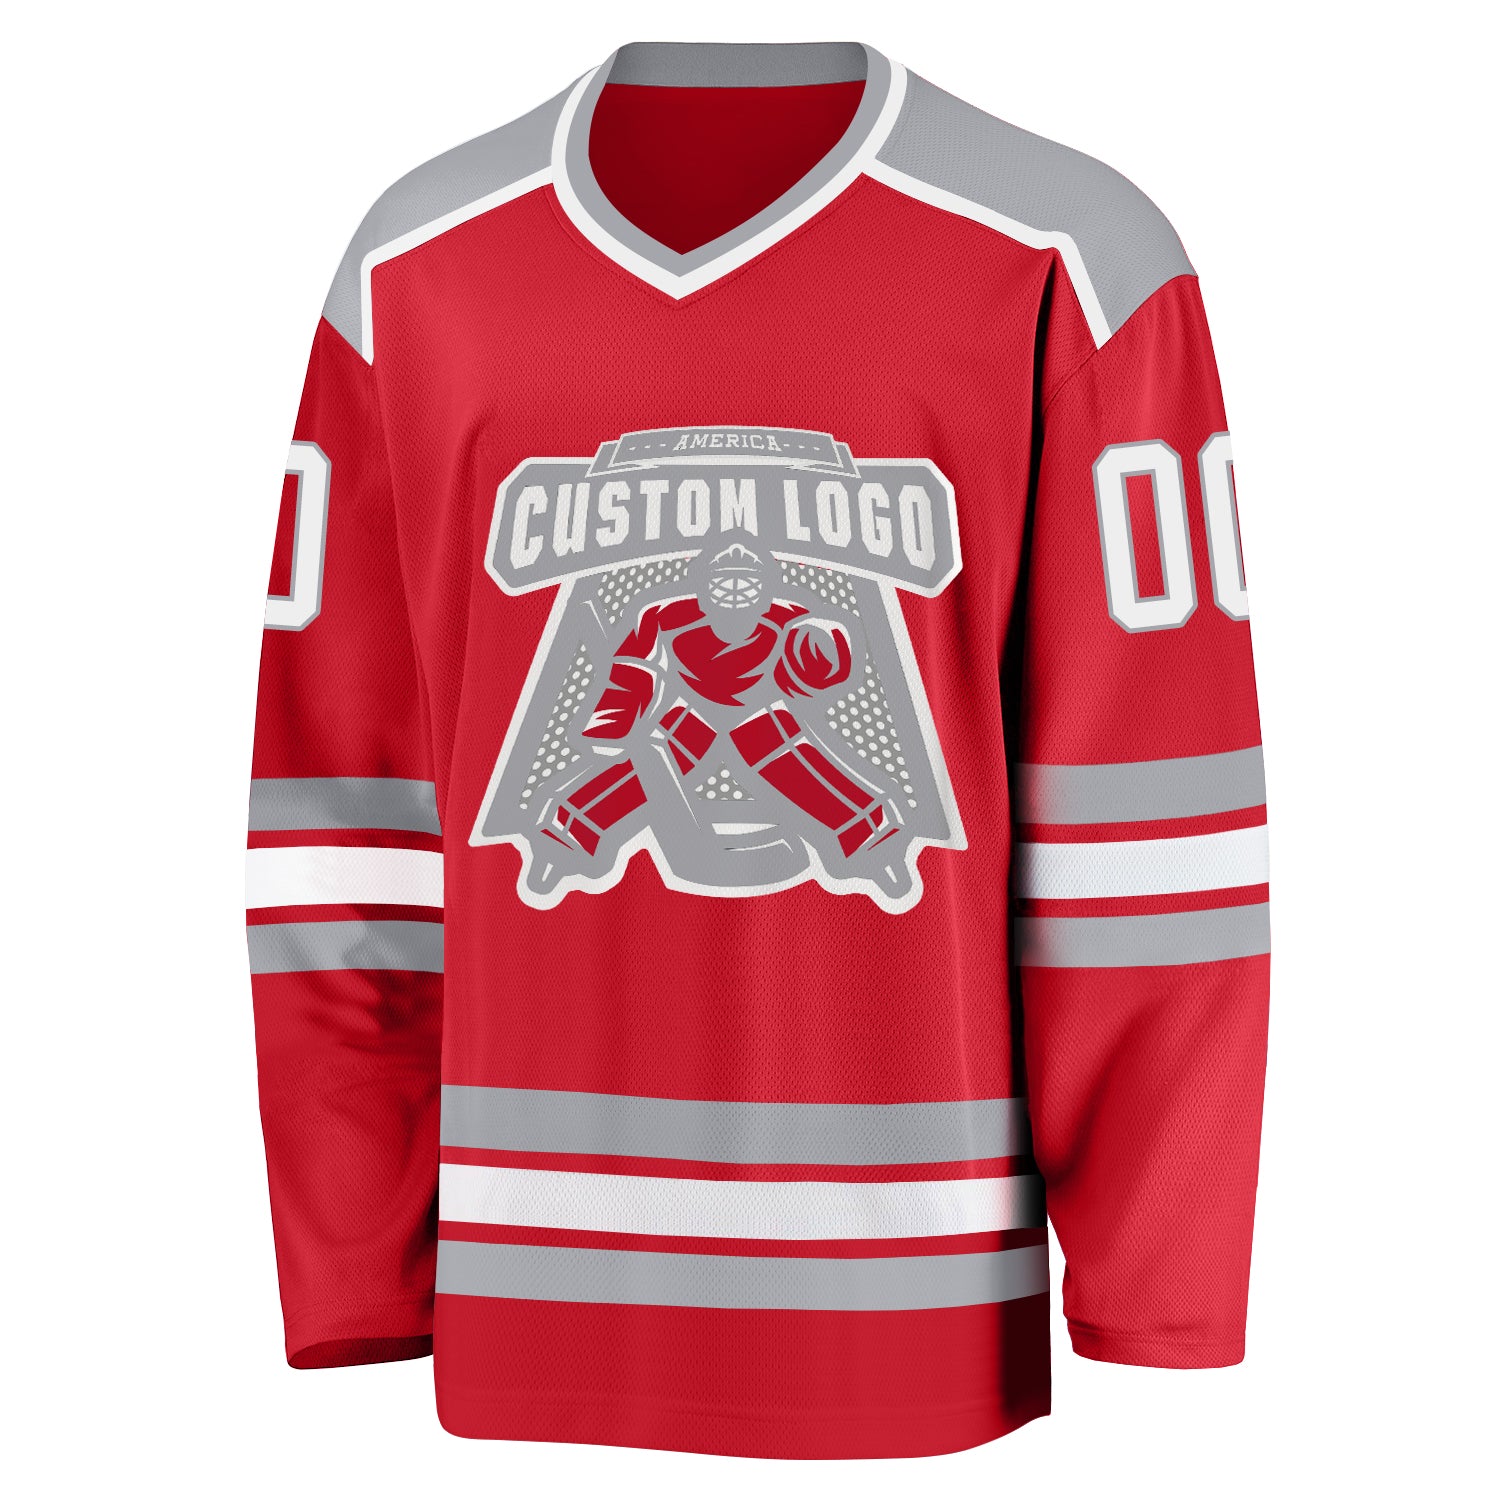 Cheap Custom Red White-Gray Hockey Jersey Free Shipping